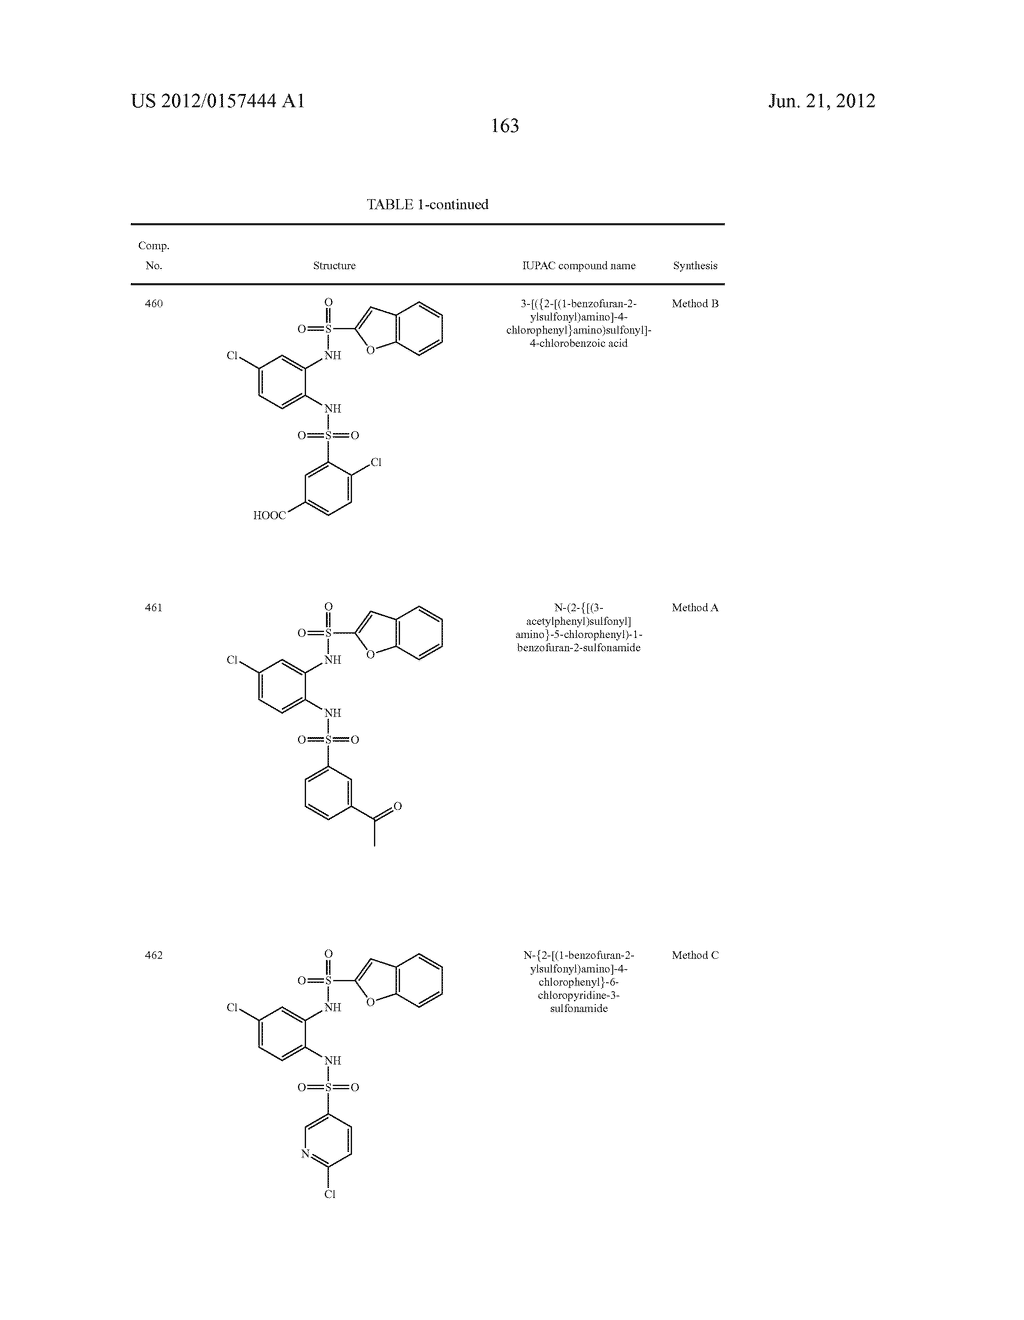 NOVEL 1,2- BIS-SULFONAMIDE DERIVATIVES AS CHEMOKINE RECEPTOR MODULATORS - diagram, schematic, and image 164